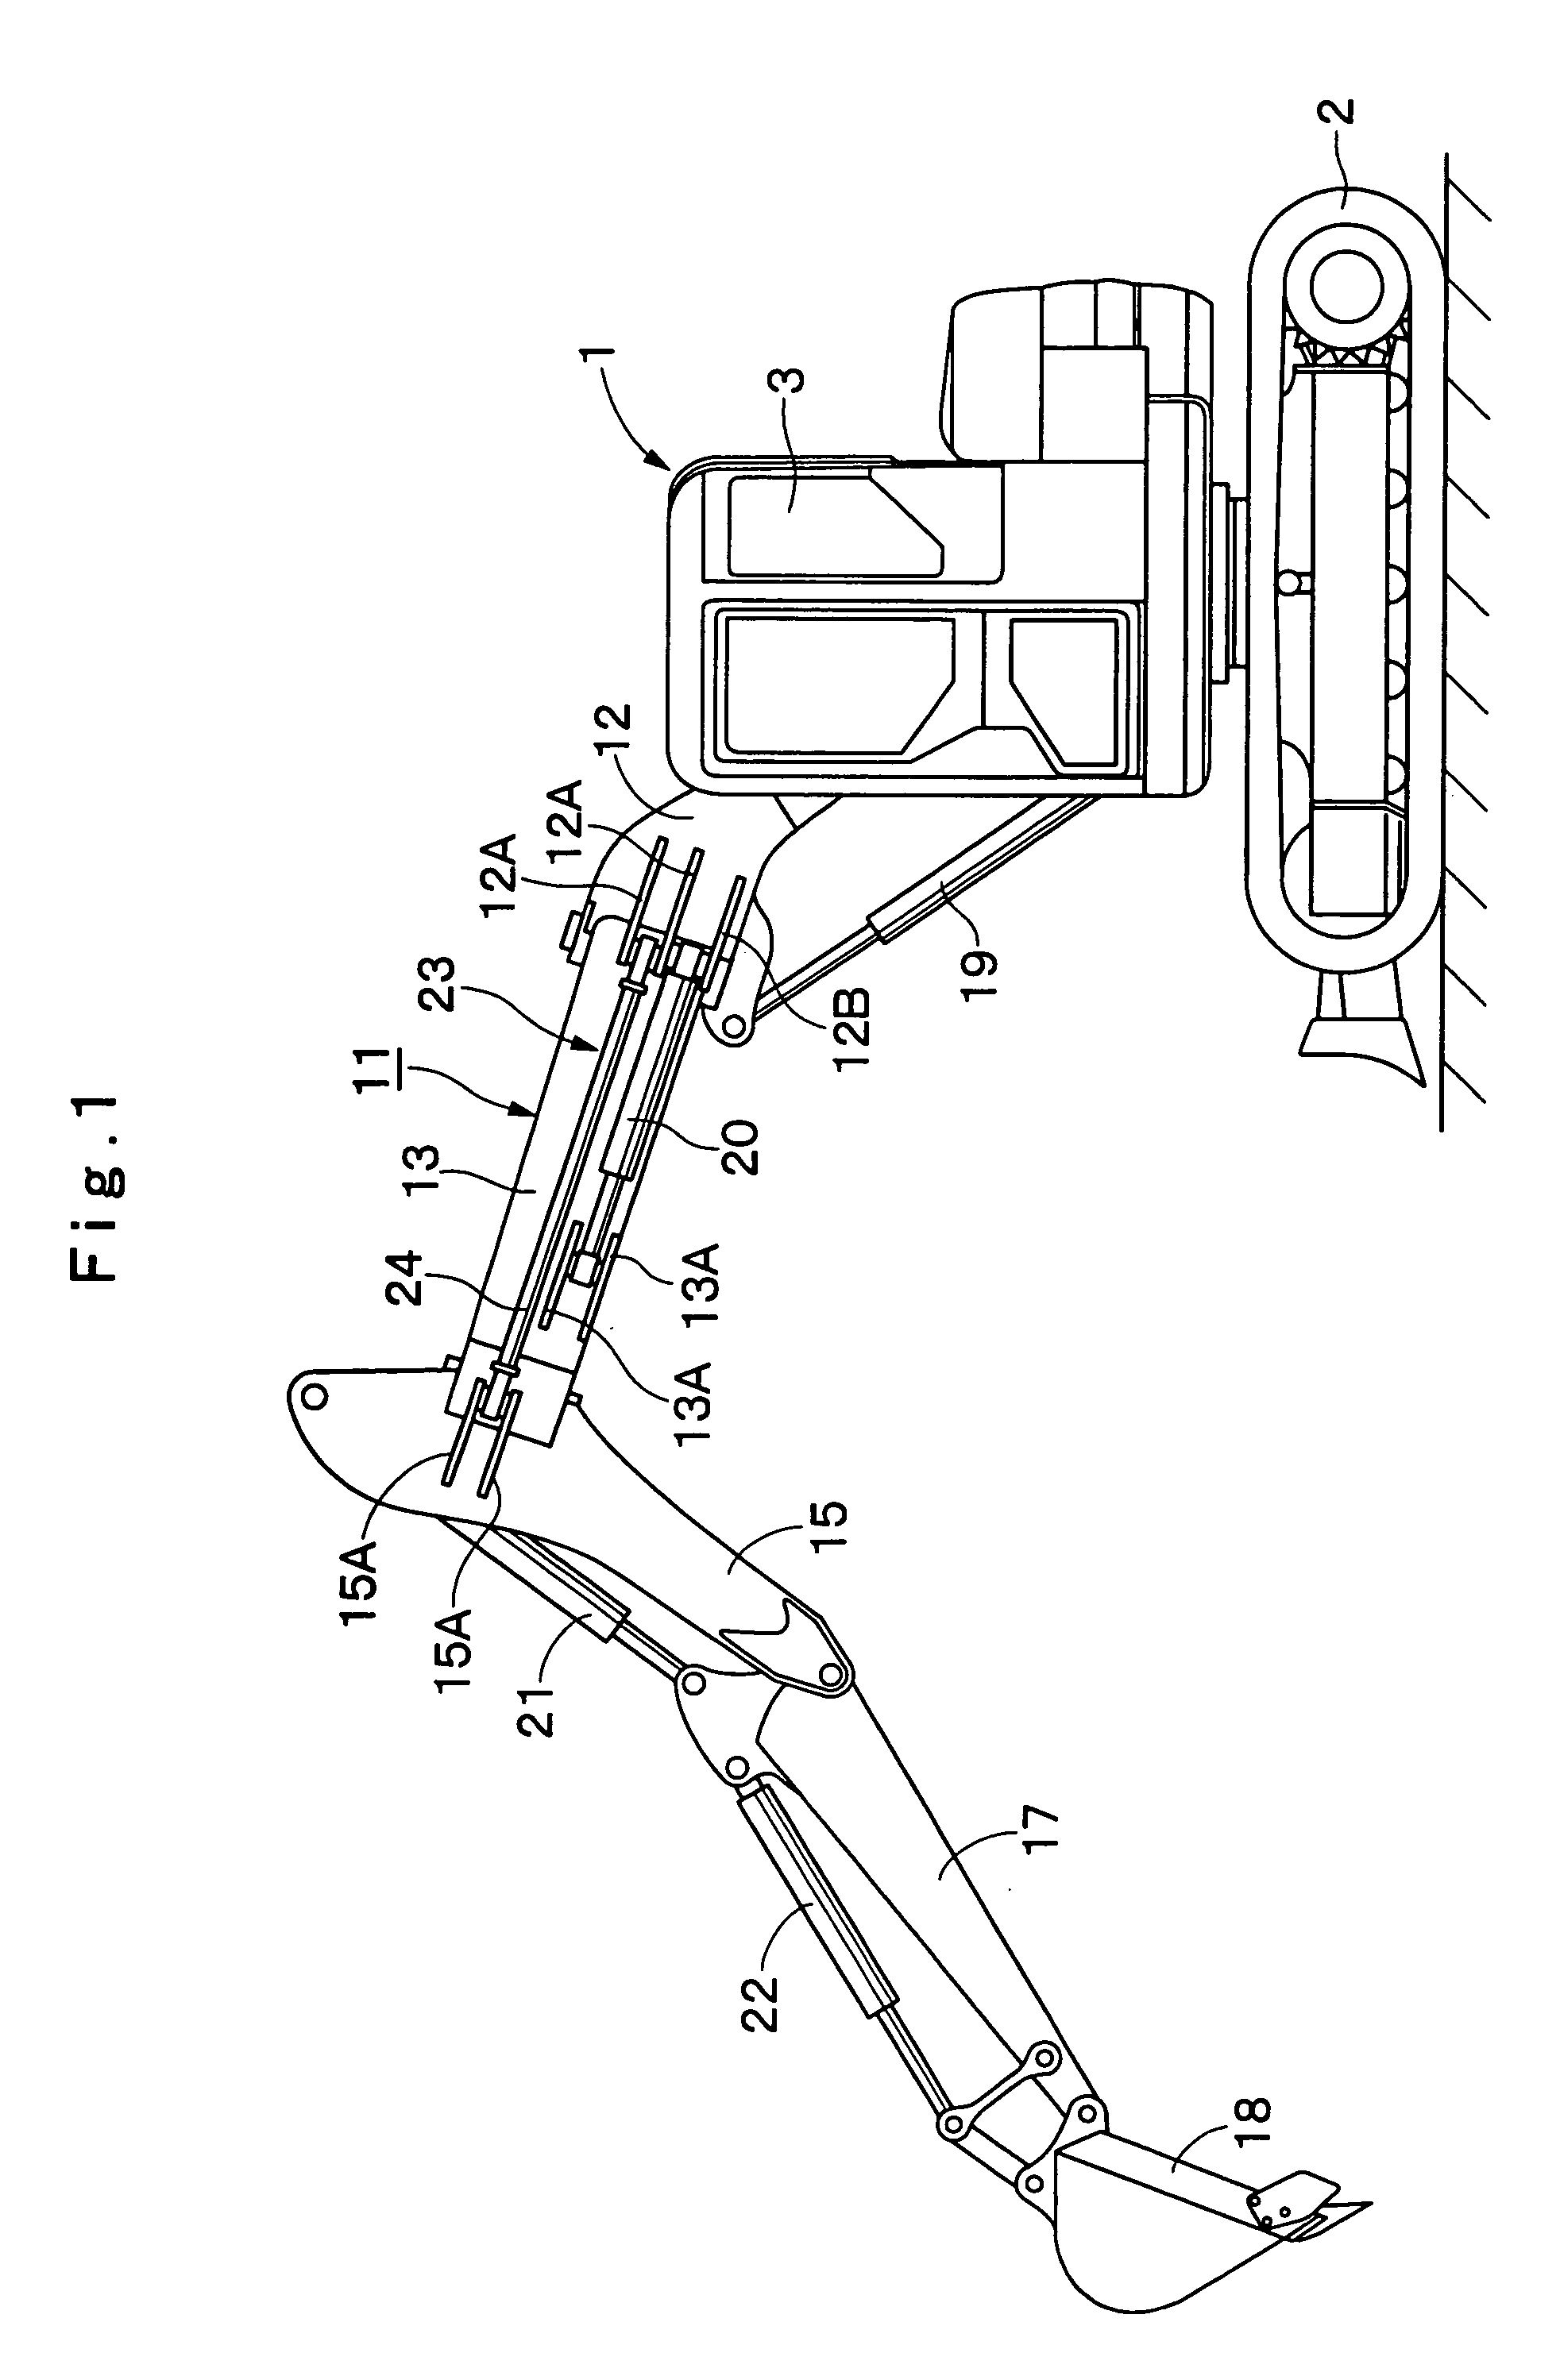 Working mechanism for construction machine